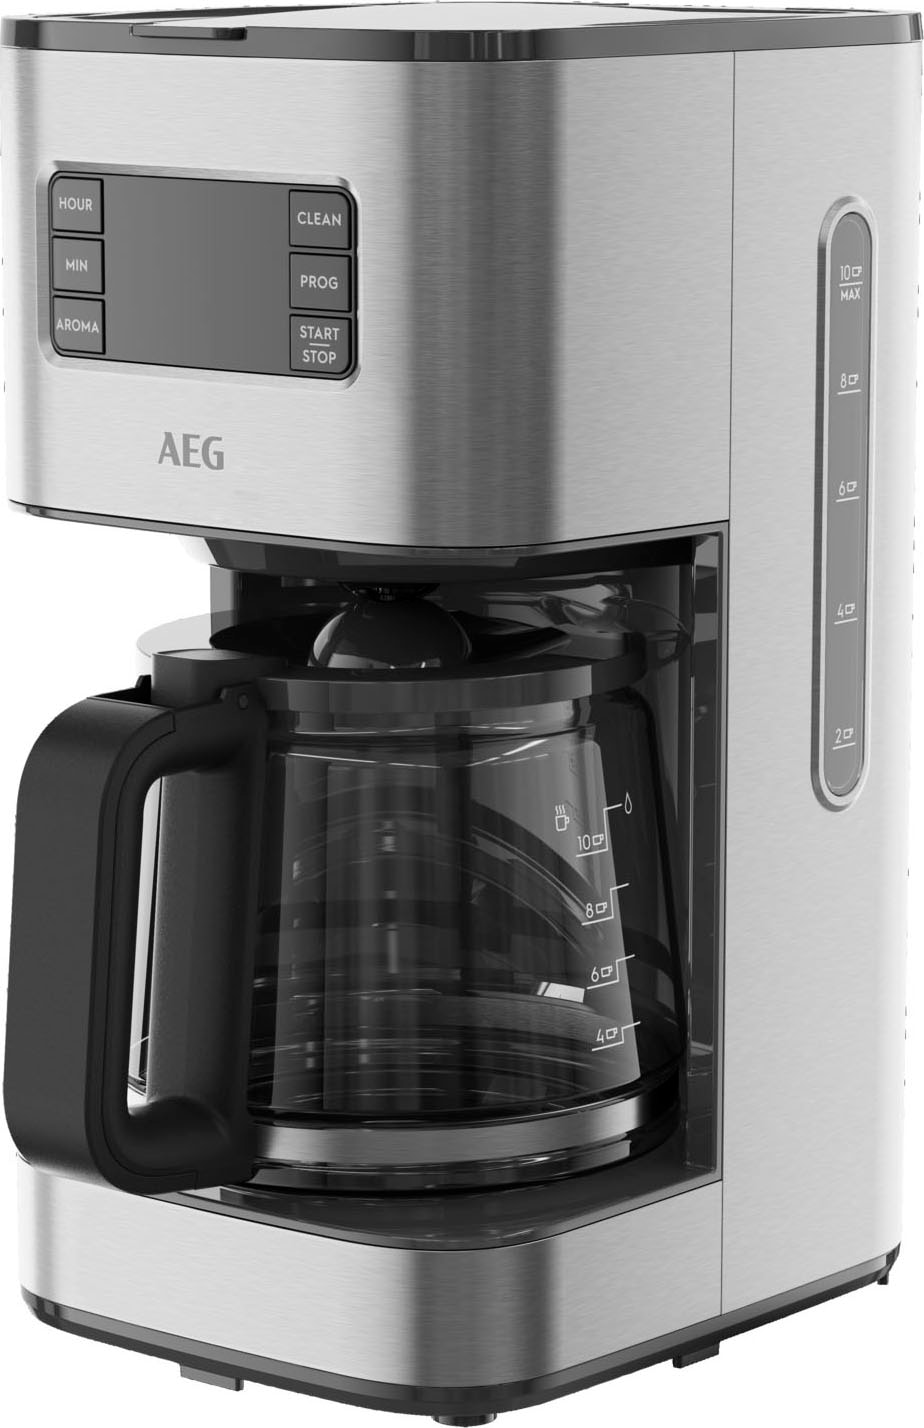 AEG Filterkaffeemaschine »Gourmet 6 CM5-1-6ST«, 1,25 l Kaffeekanne, Korbfilter, 1x4